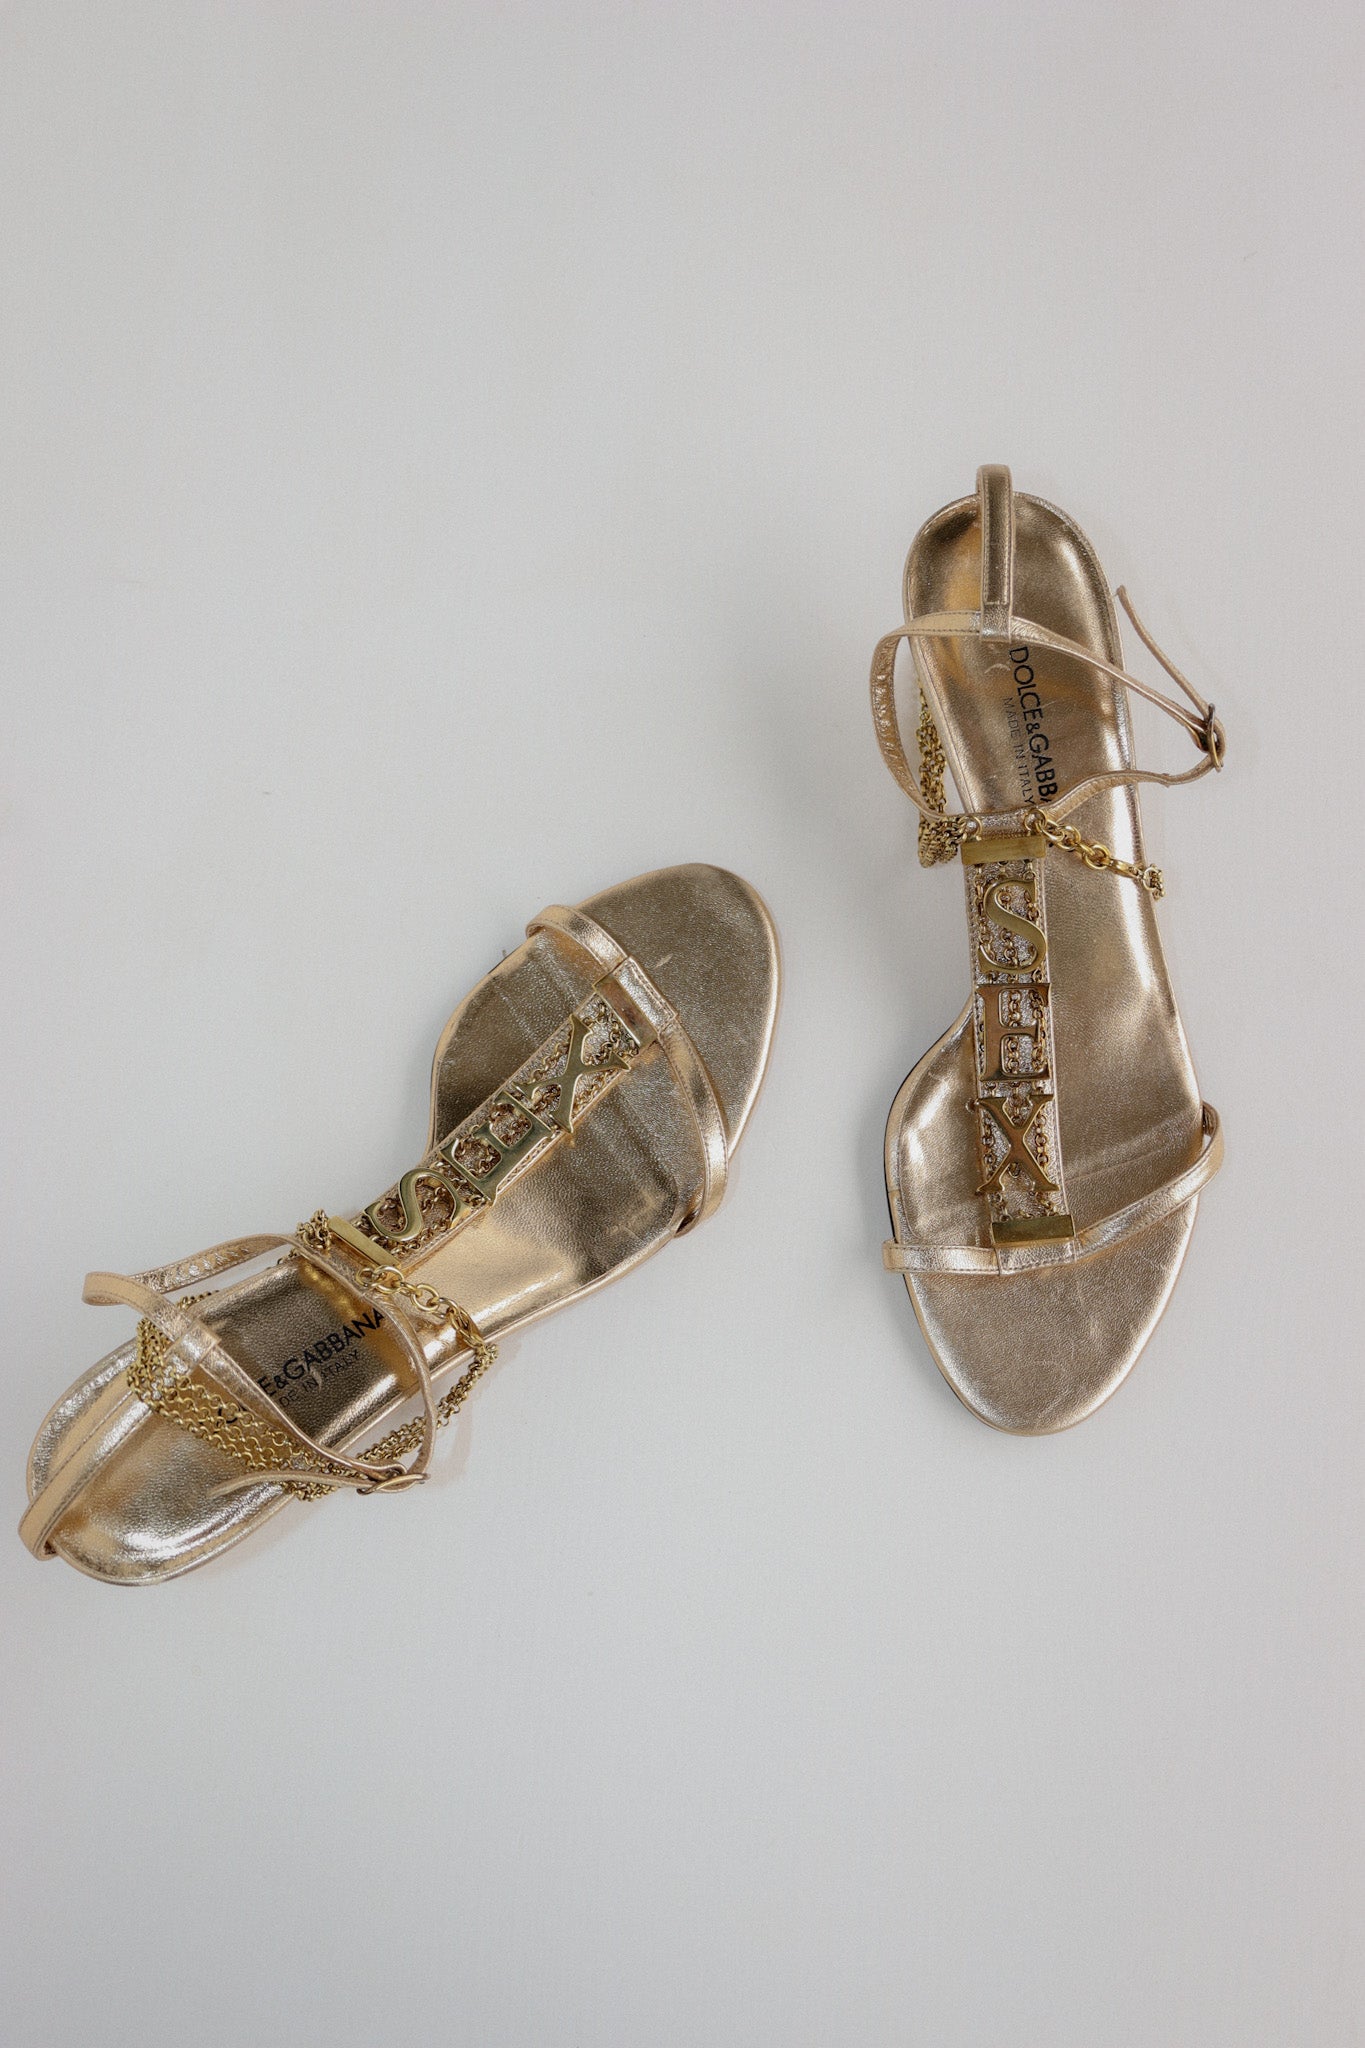 Vintage Dolce & Gabbana "SATC" Sandals 36